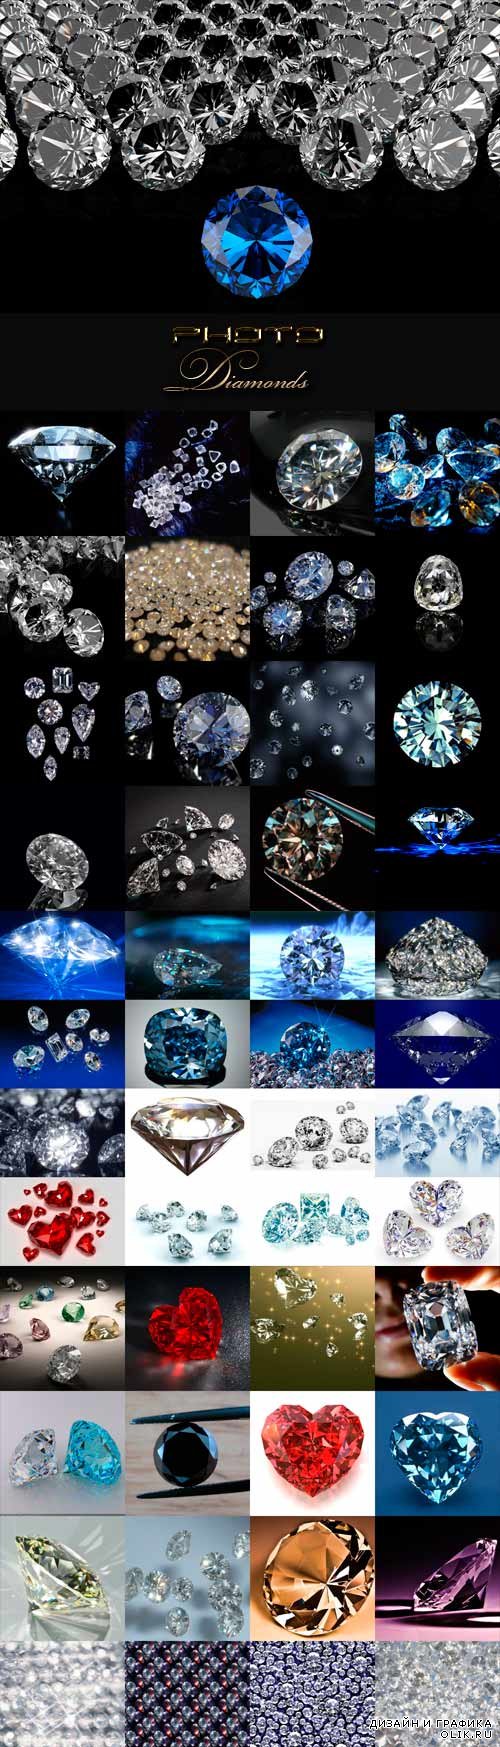 Diamonds raster graphics